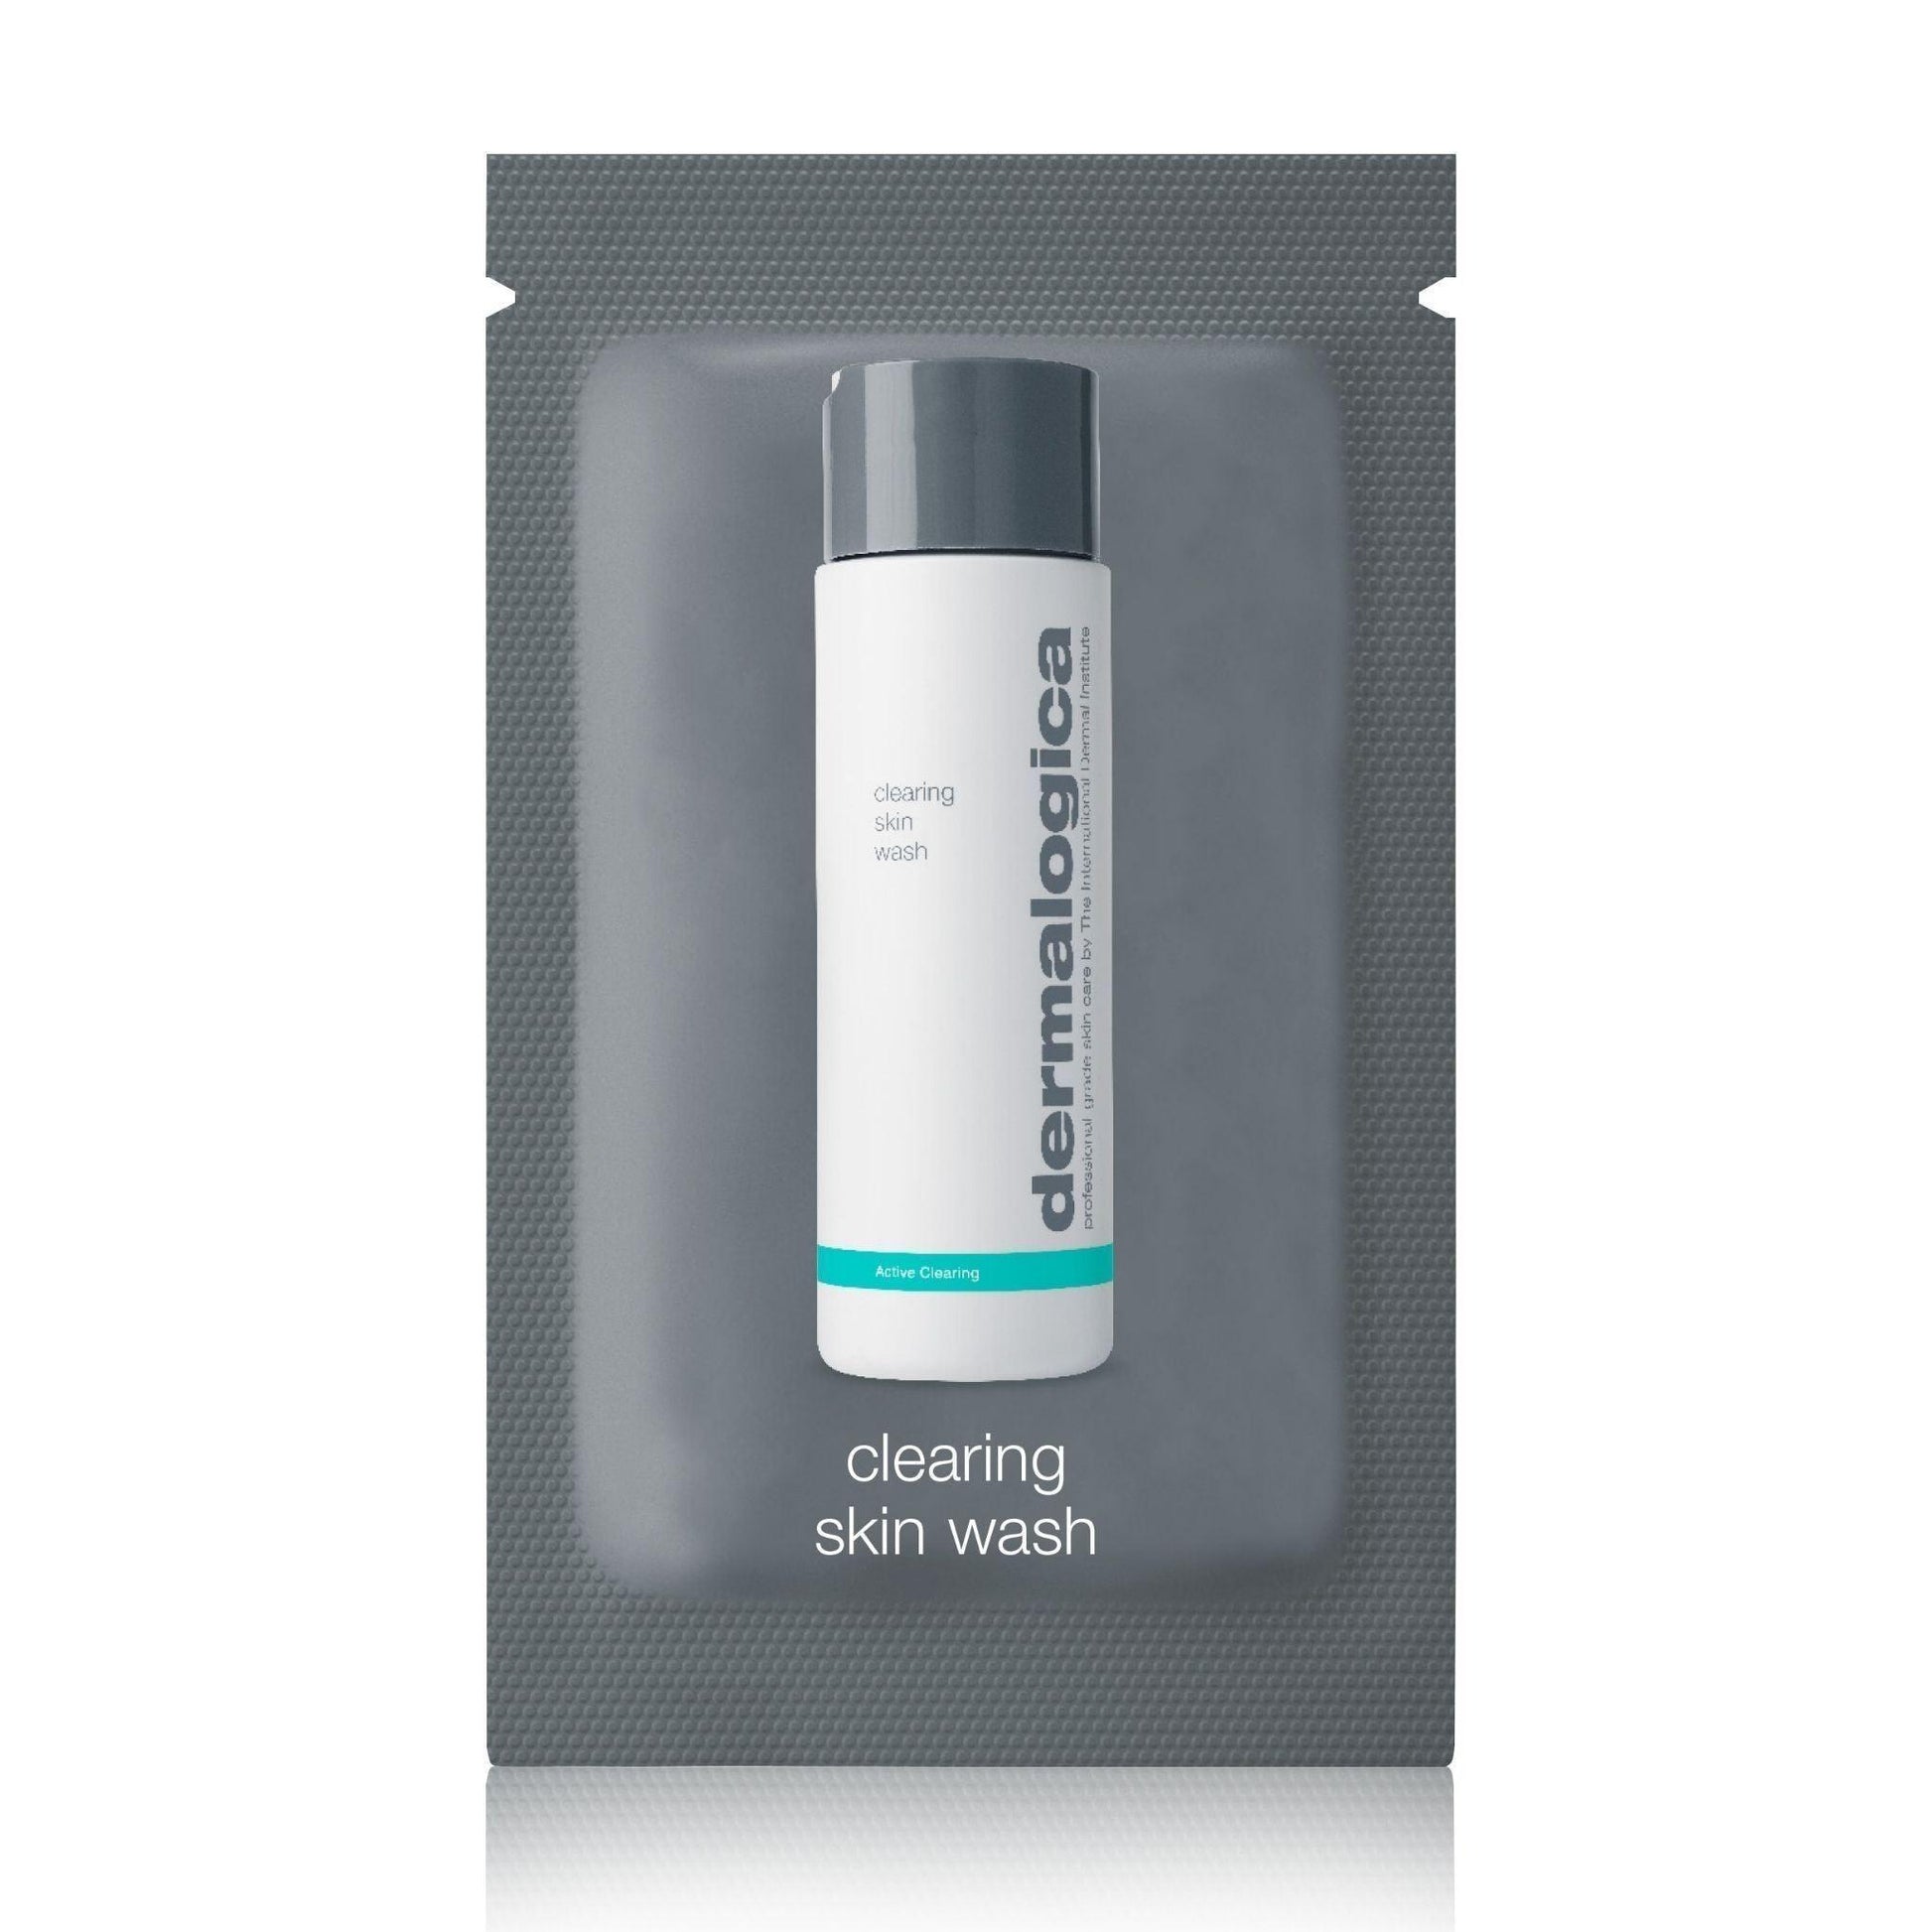 clearing skin wash (sample) - Dermalogica Thailand